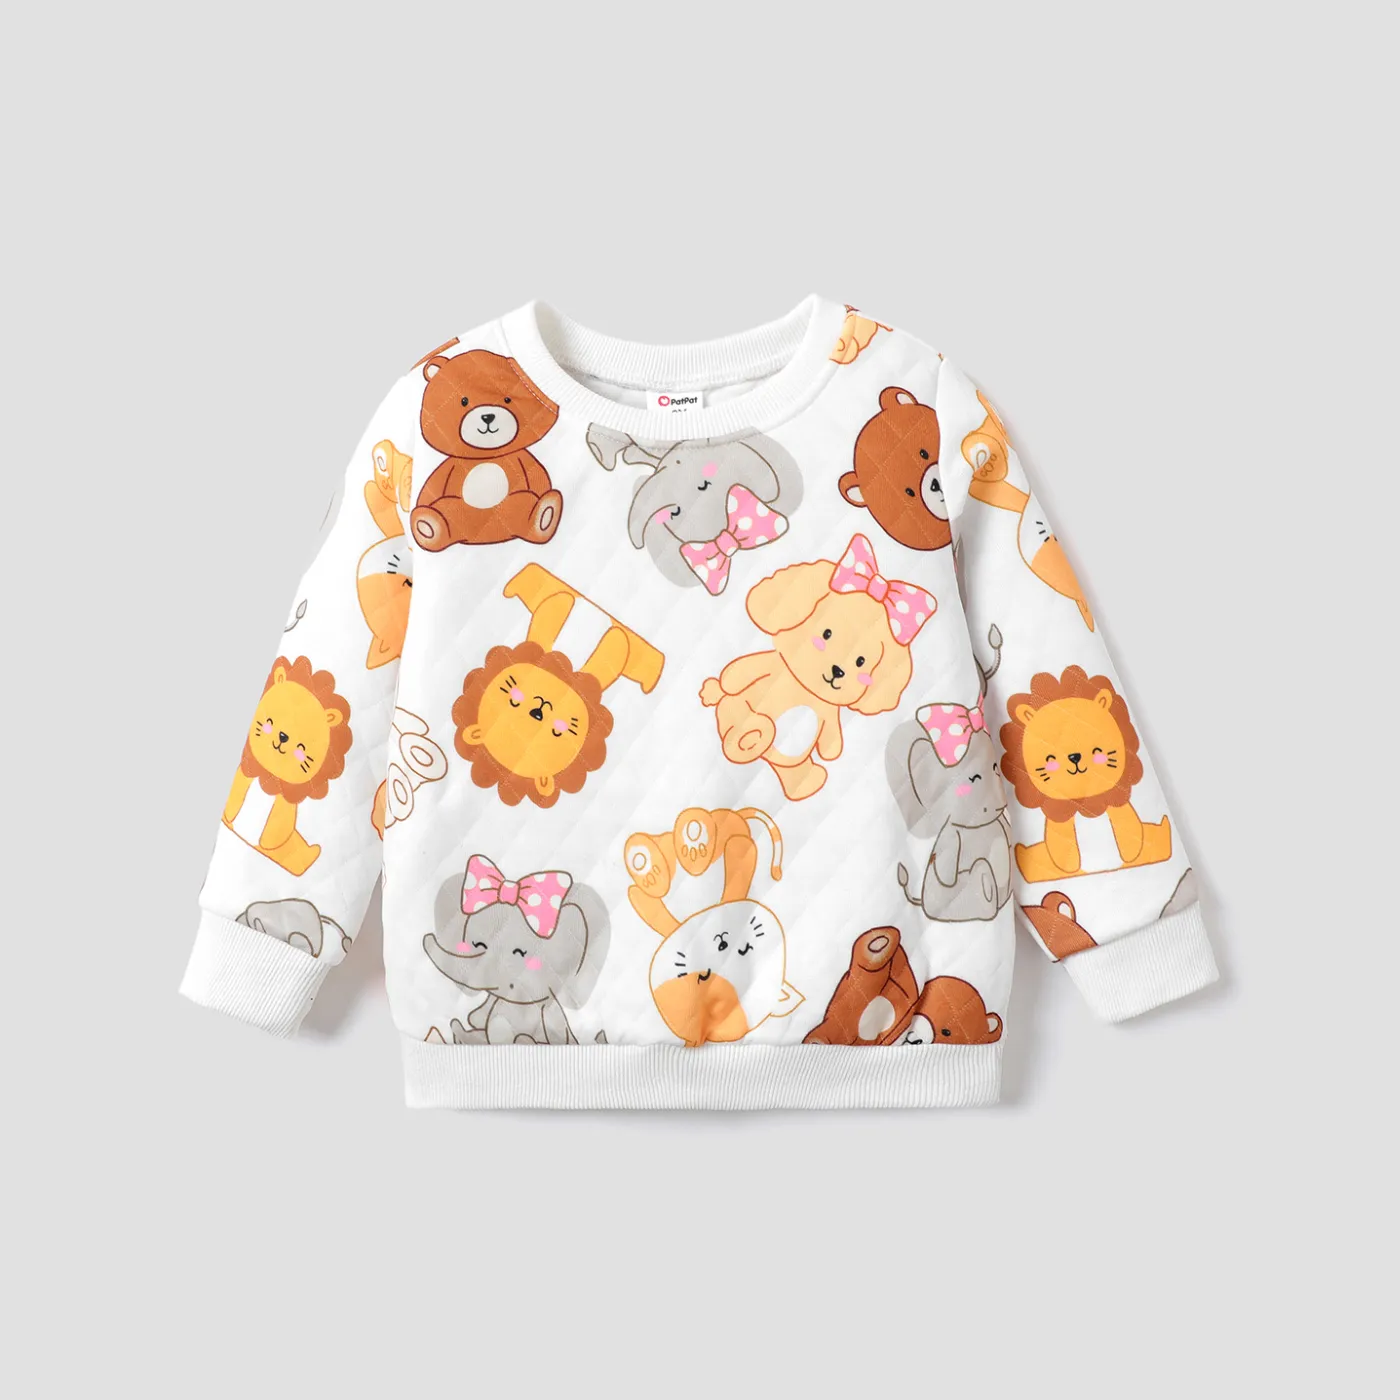 Toddler Girl Childlike Animal Pattern Fabric Stitching Top